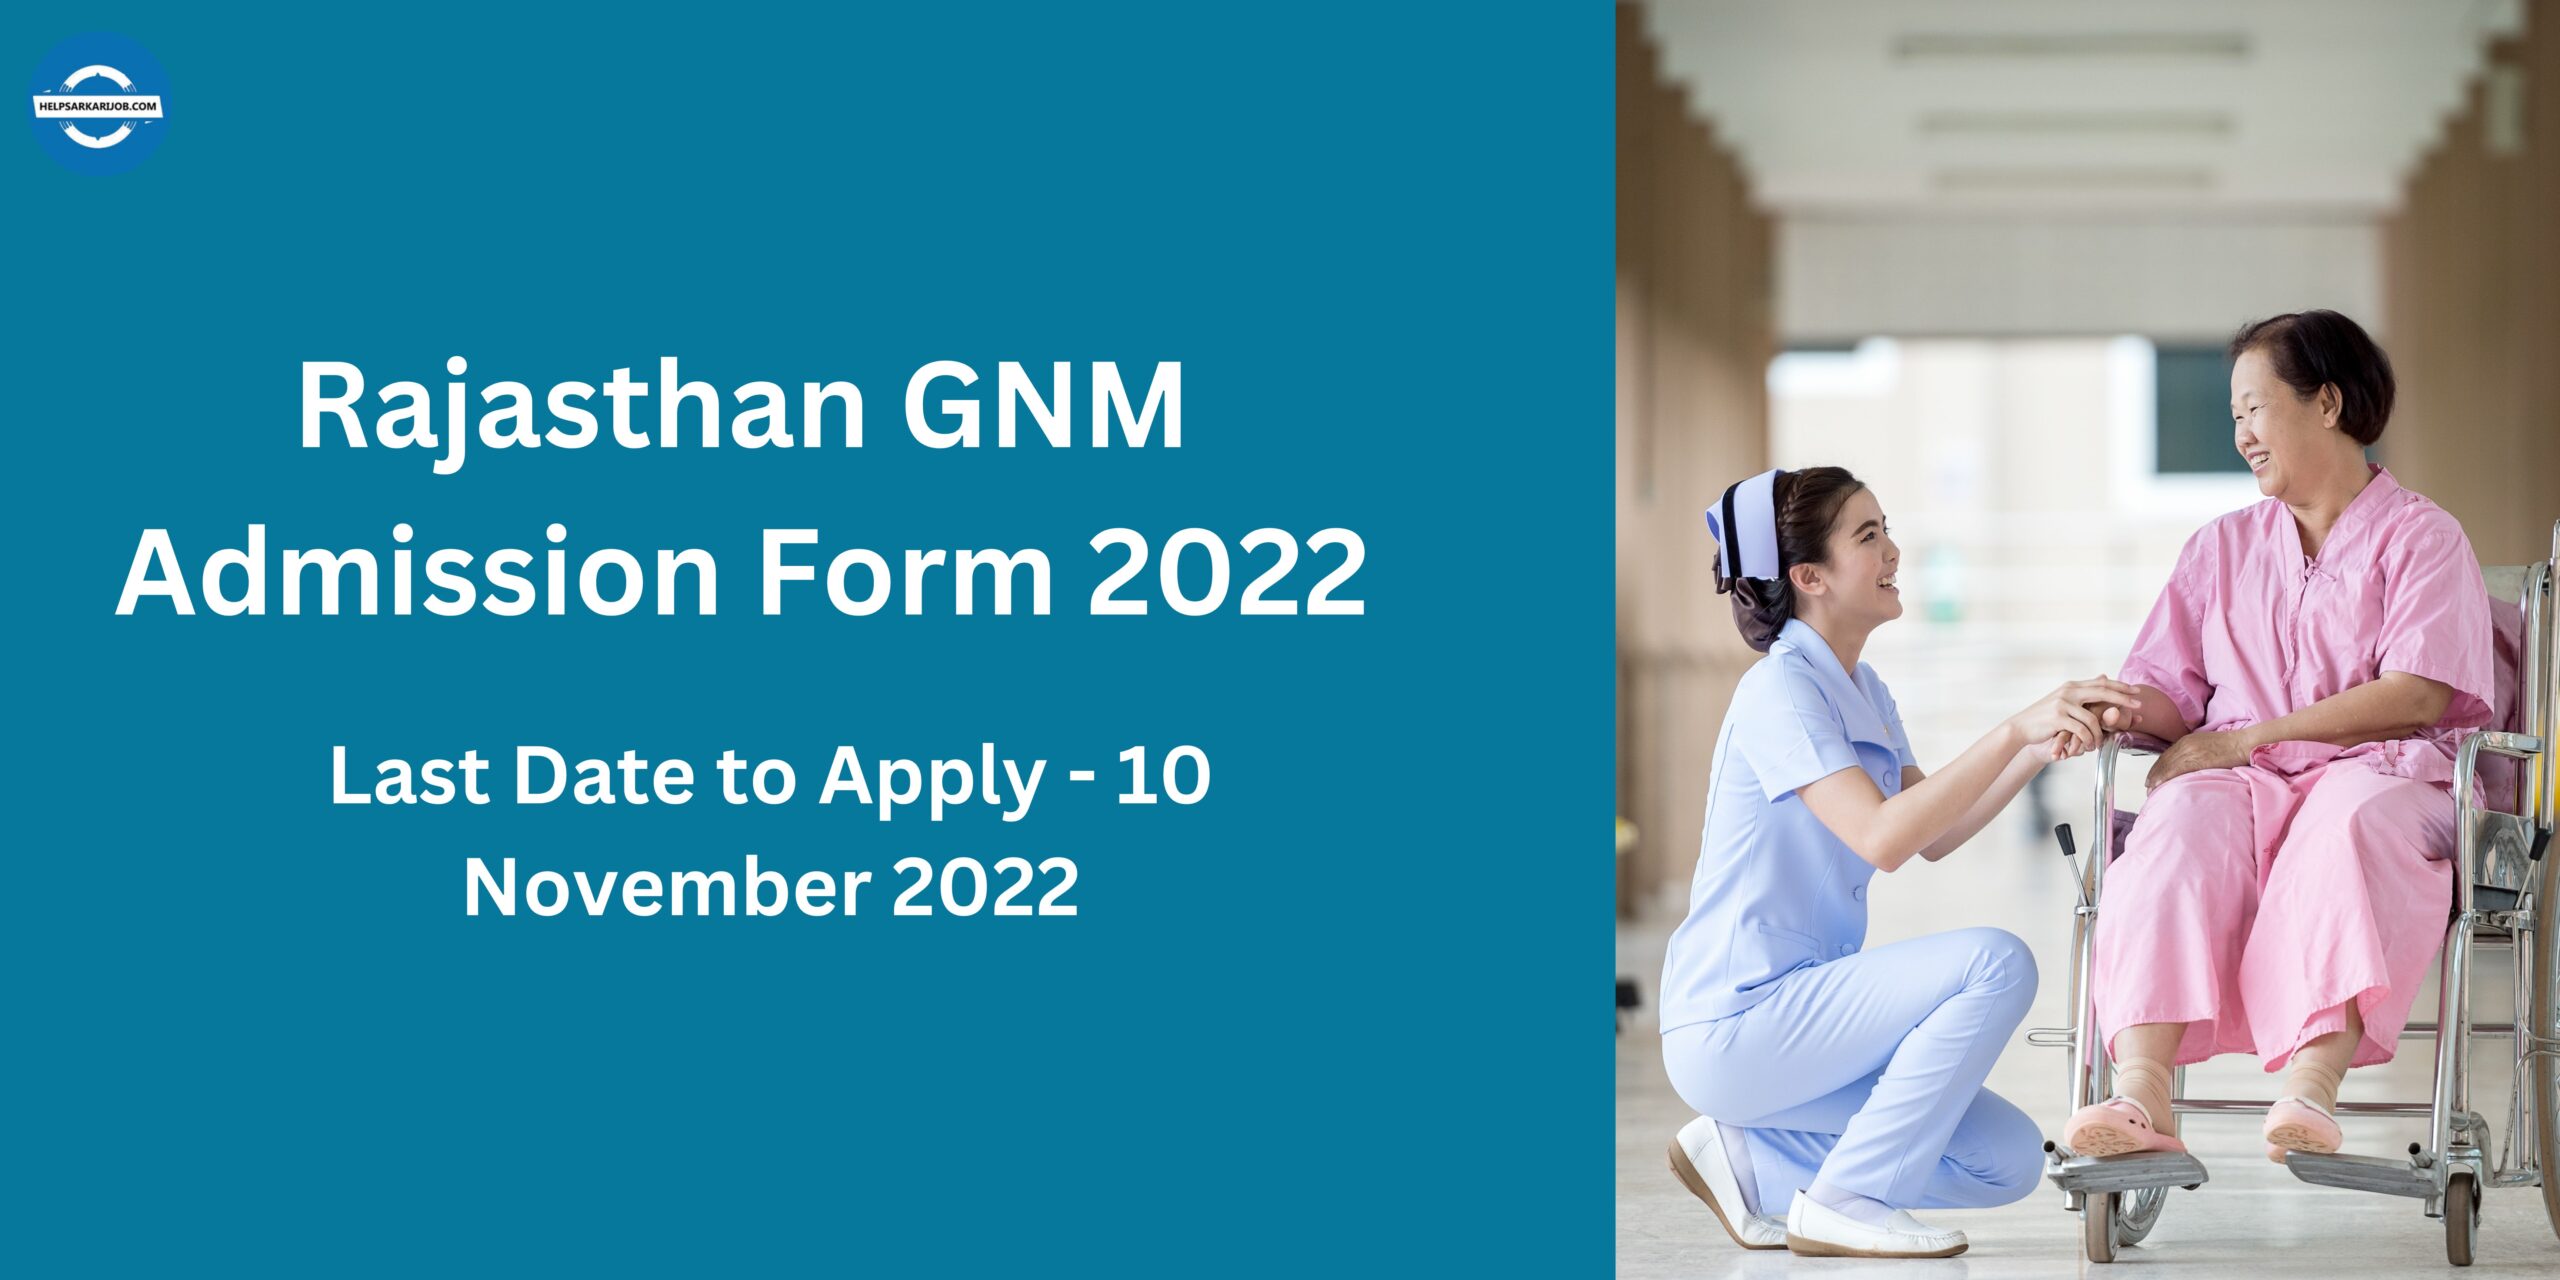 Rajasthan GNM Admission Form 2022